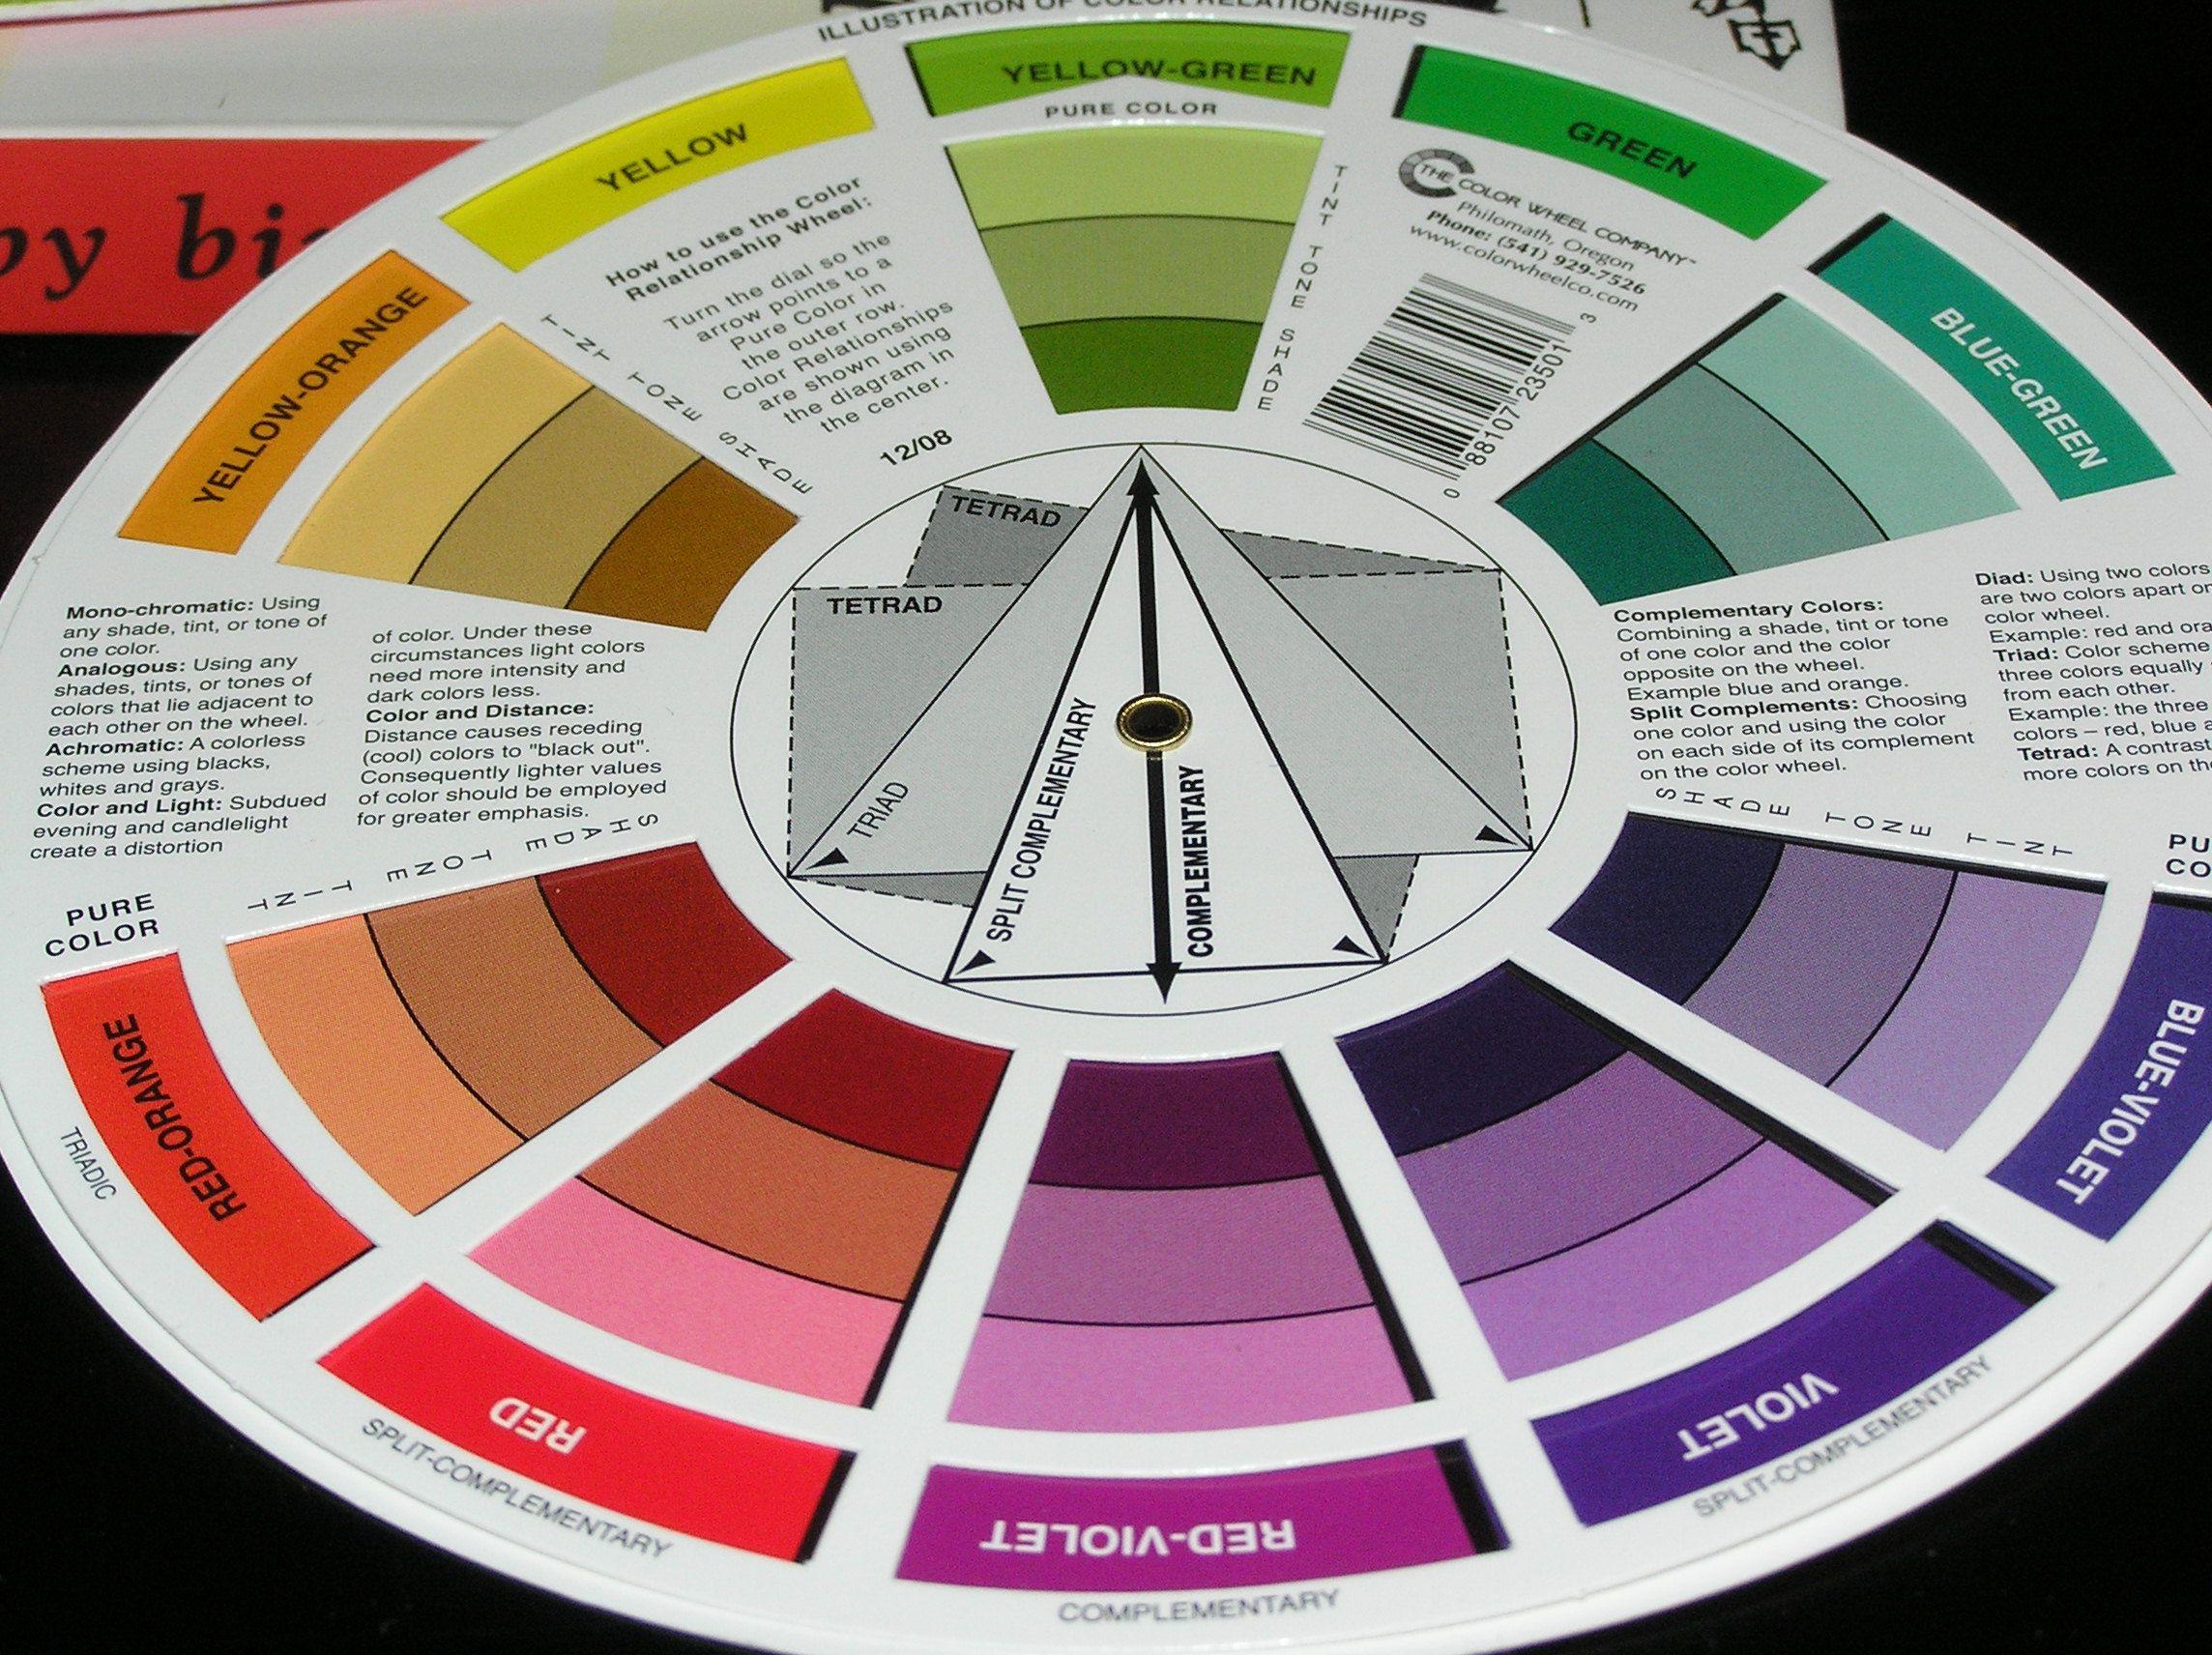 Color Wheel Scheme 34304 HD Wallpaper: 0x0